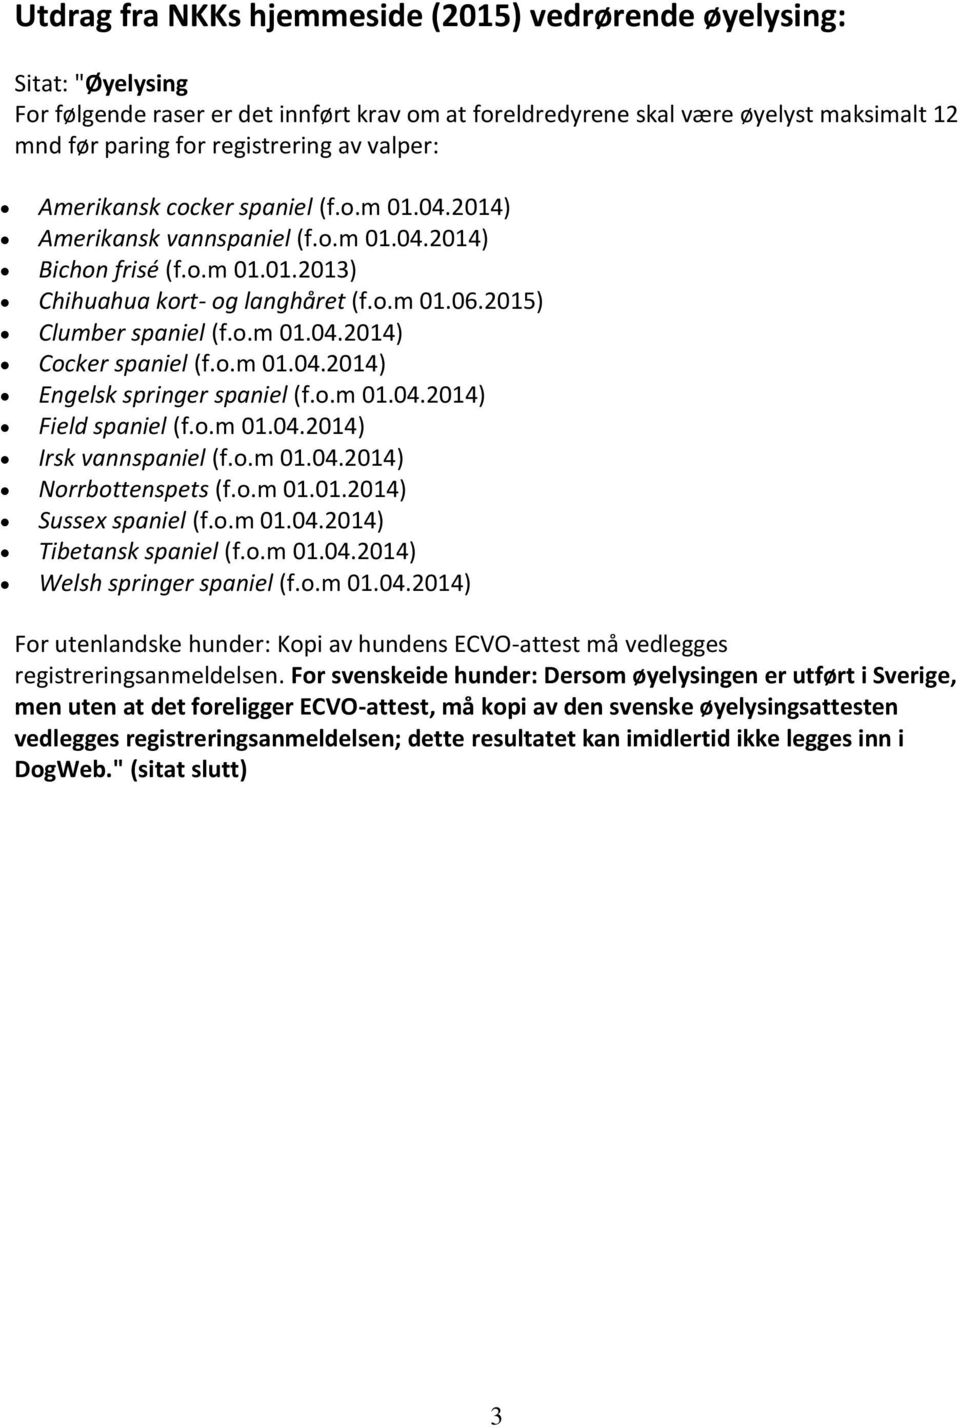 o.m 01.04.2014) Engelsk springer spaniel (f.o.m 01.04.2014) Field spaniel (f.o.m 01.04.2014) Irsk vannspaniel (f.o.m 01.04.2014) Norrbottenspets (f.o.m 01.01.2014) Sussex spaniel (f.o.m 01.04.2014) Tibetansk spaniel (f.